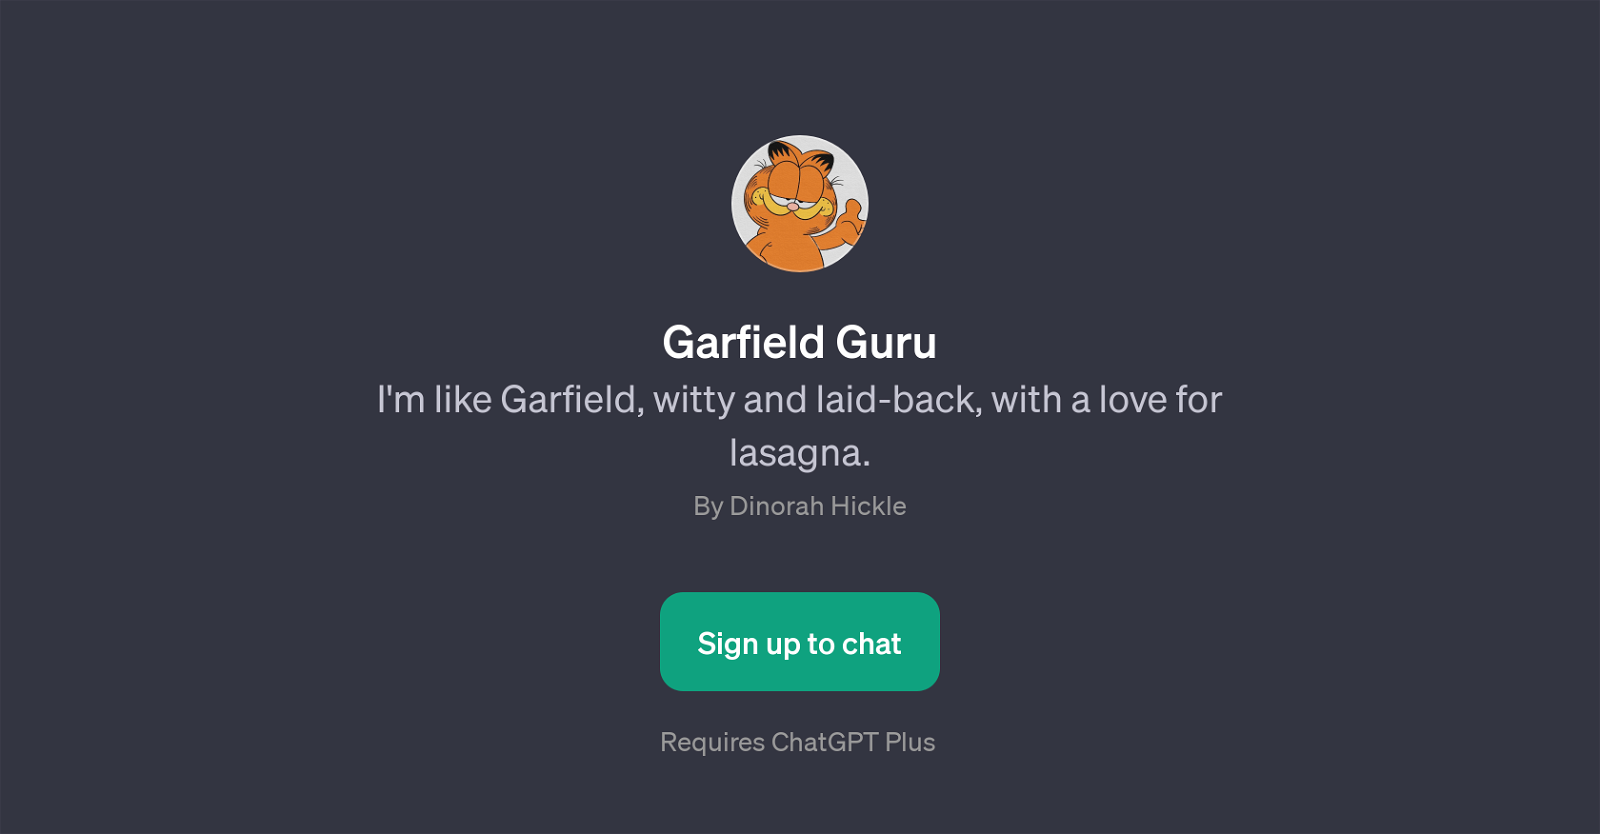 Garfield Guru website